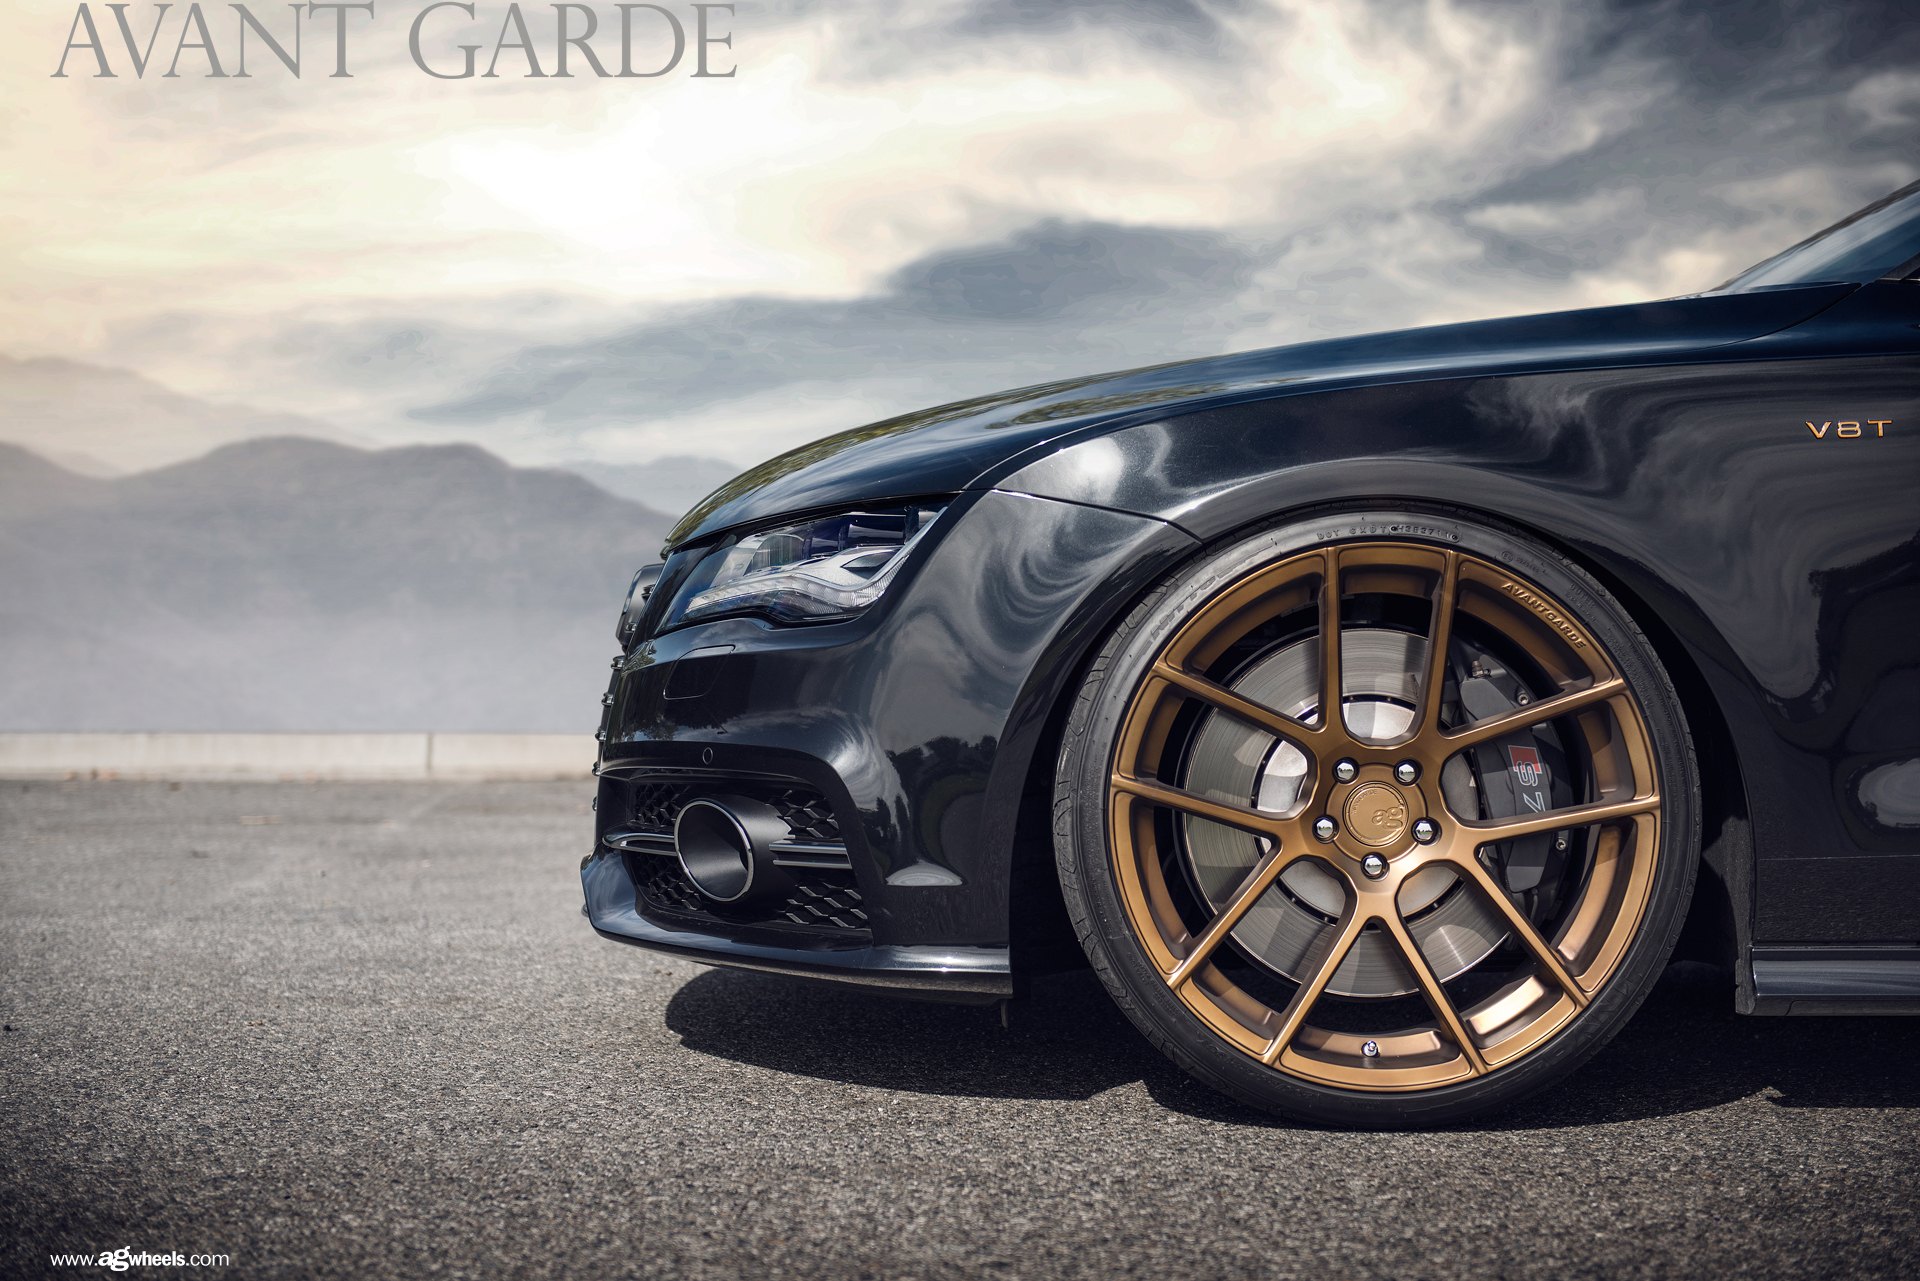 Black Audi S7 V8T with Gold Avant Garde Wheels - Photo by Avant Garde Wheels